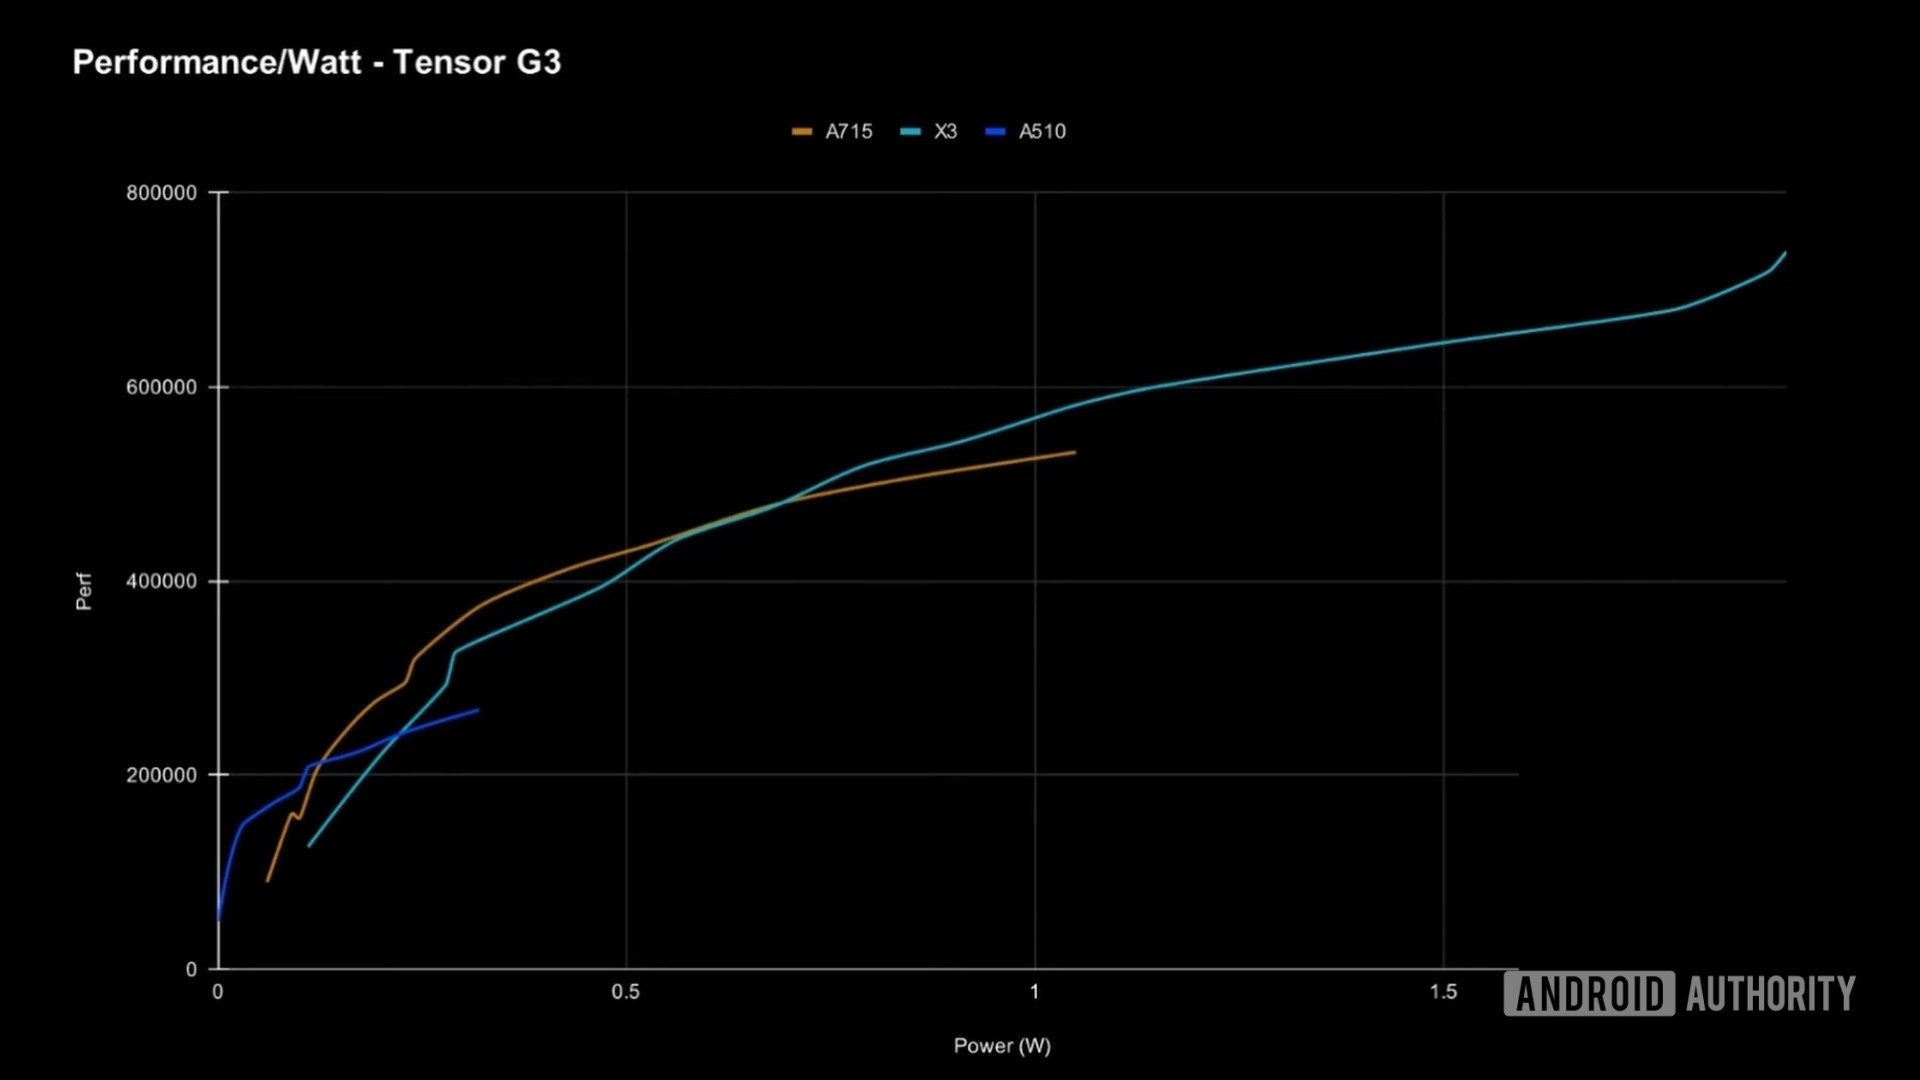 google tensor g3 performance per watt performance watt graph